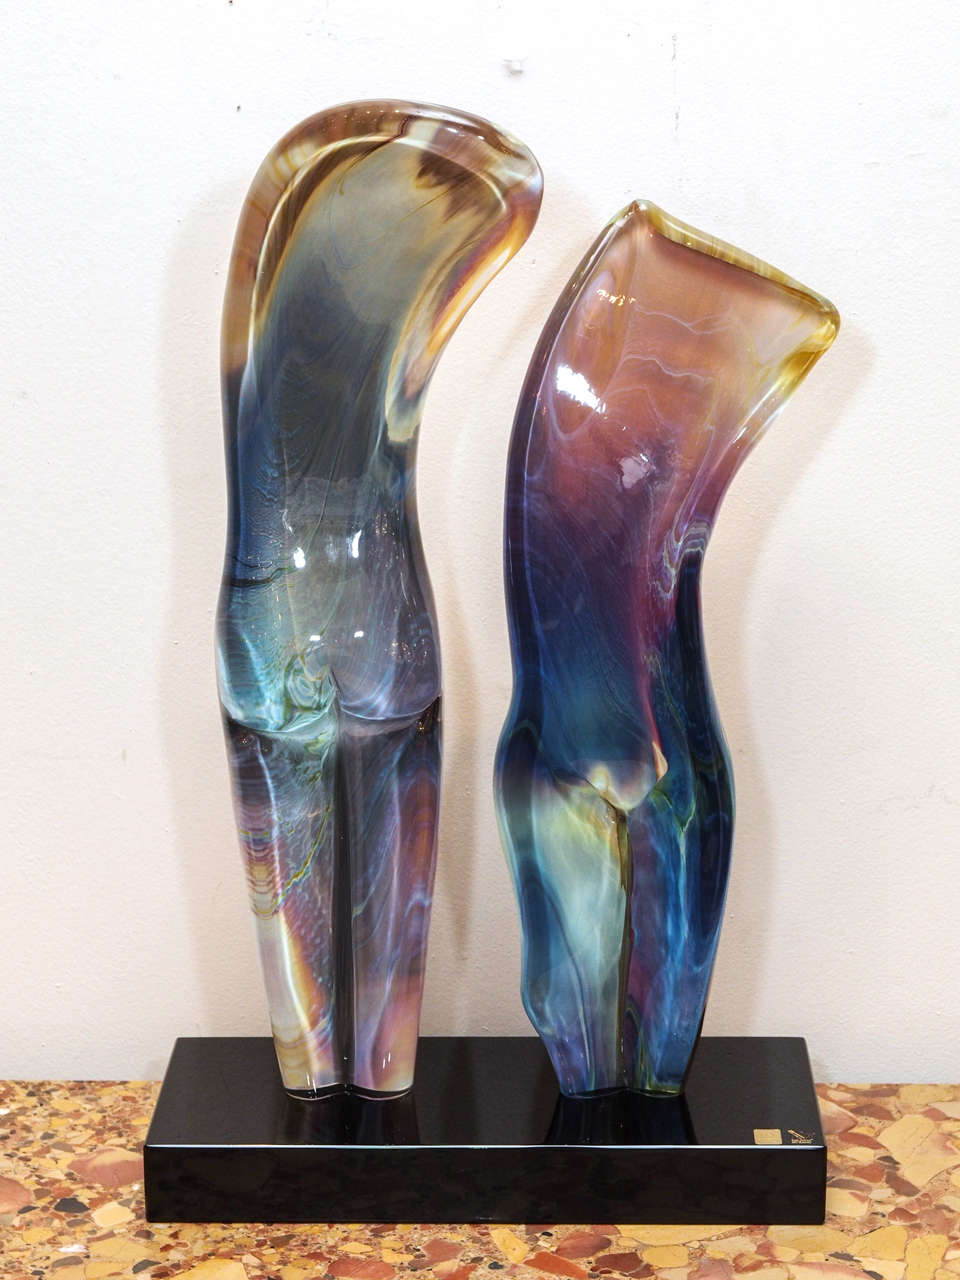 A Murano glass sculpture titled 